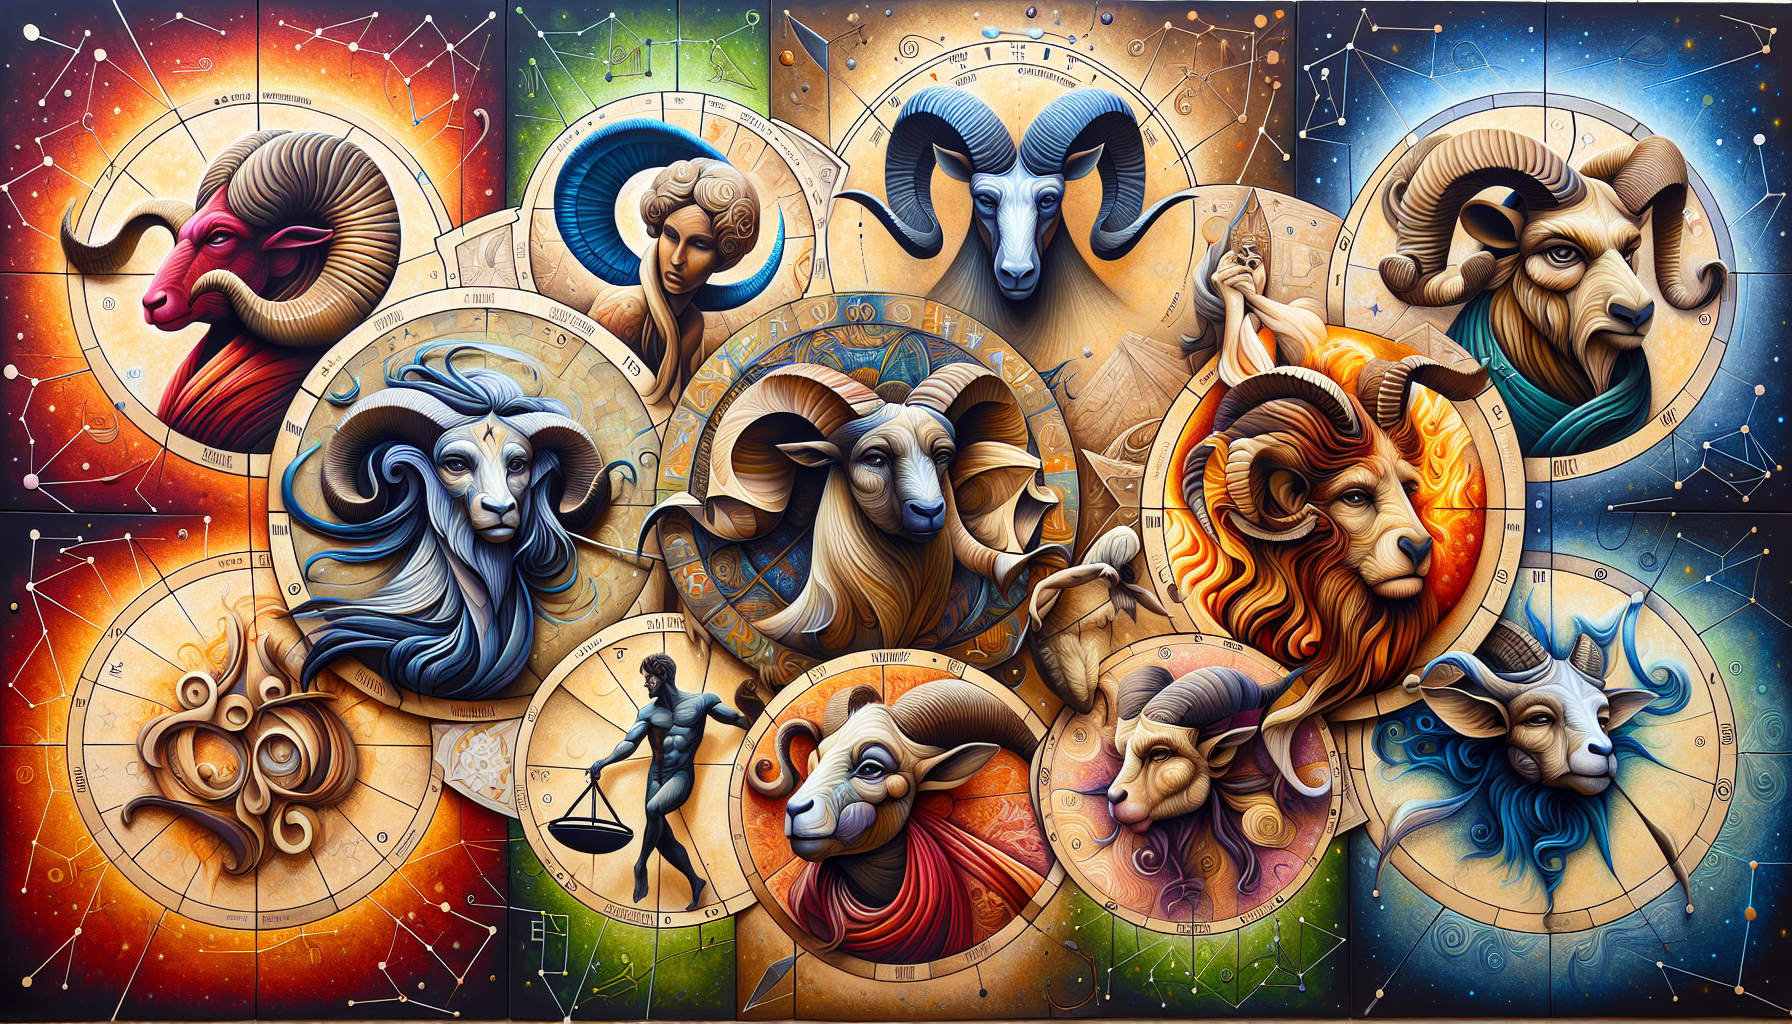 Artistic representation of zodiac signs